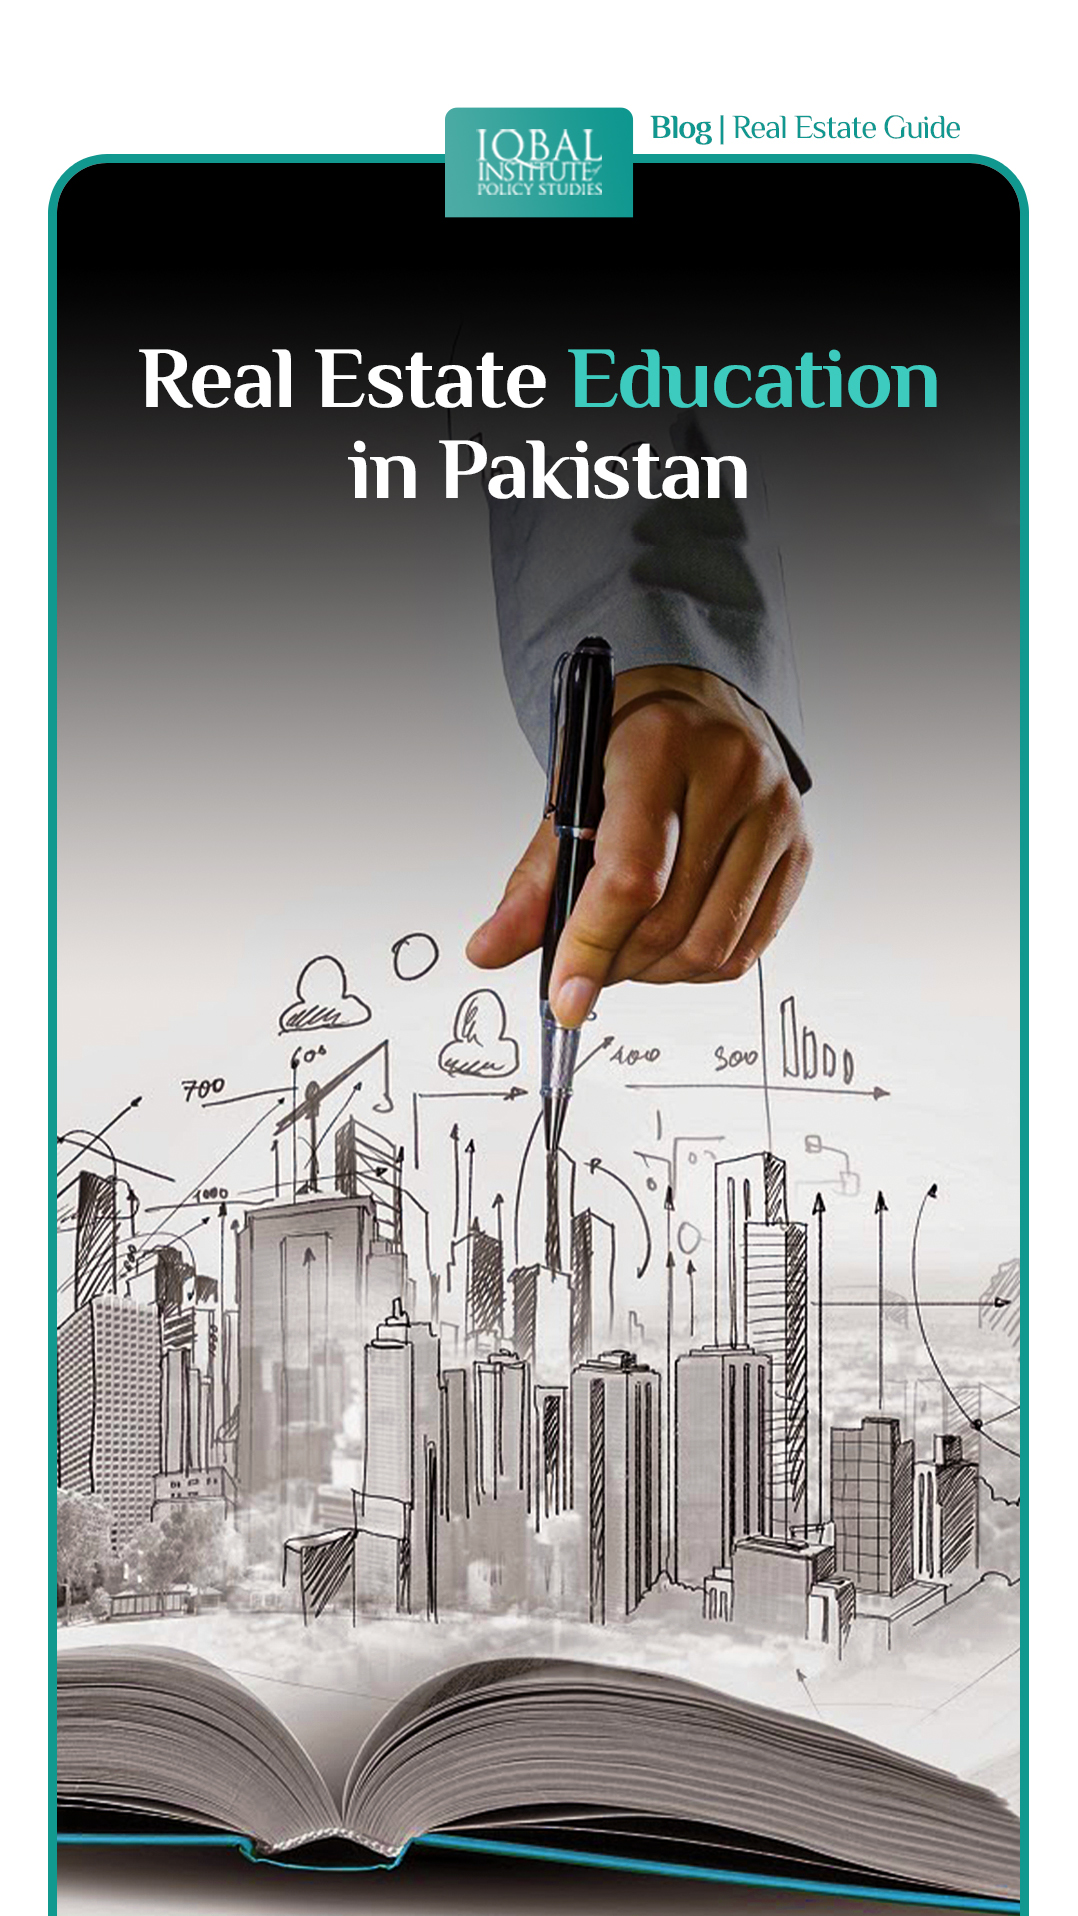 Real estate education in Pakistan